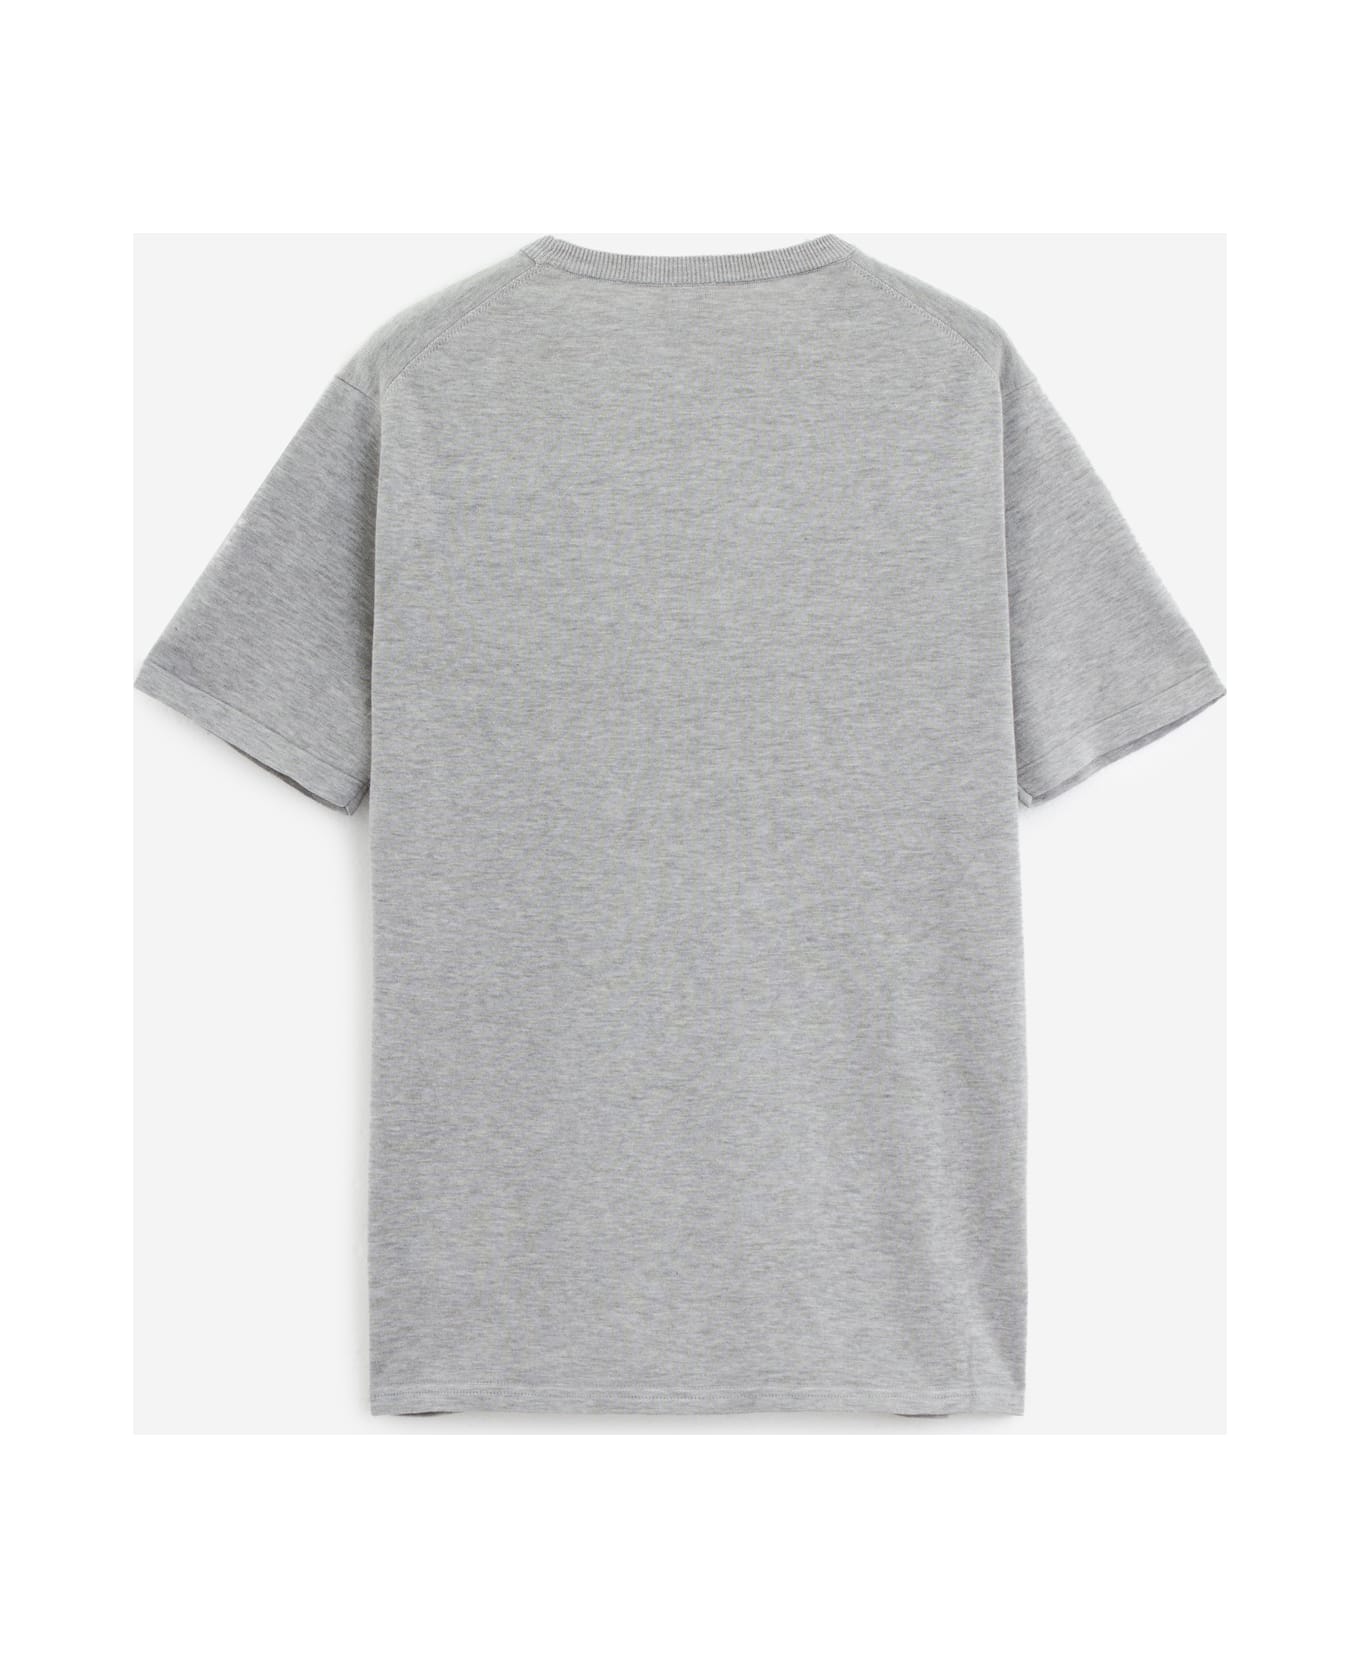 Aspesi T-shirt - grey